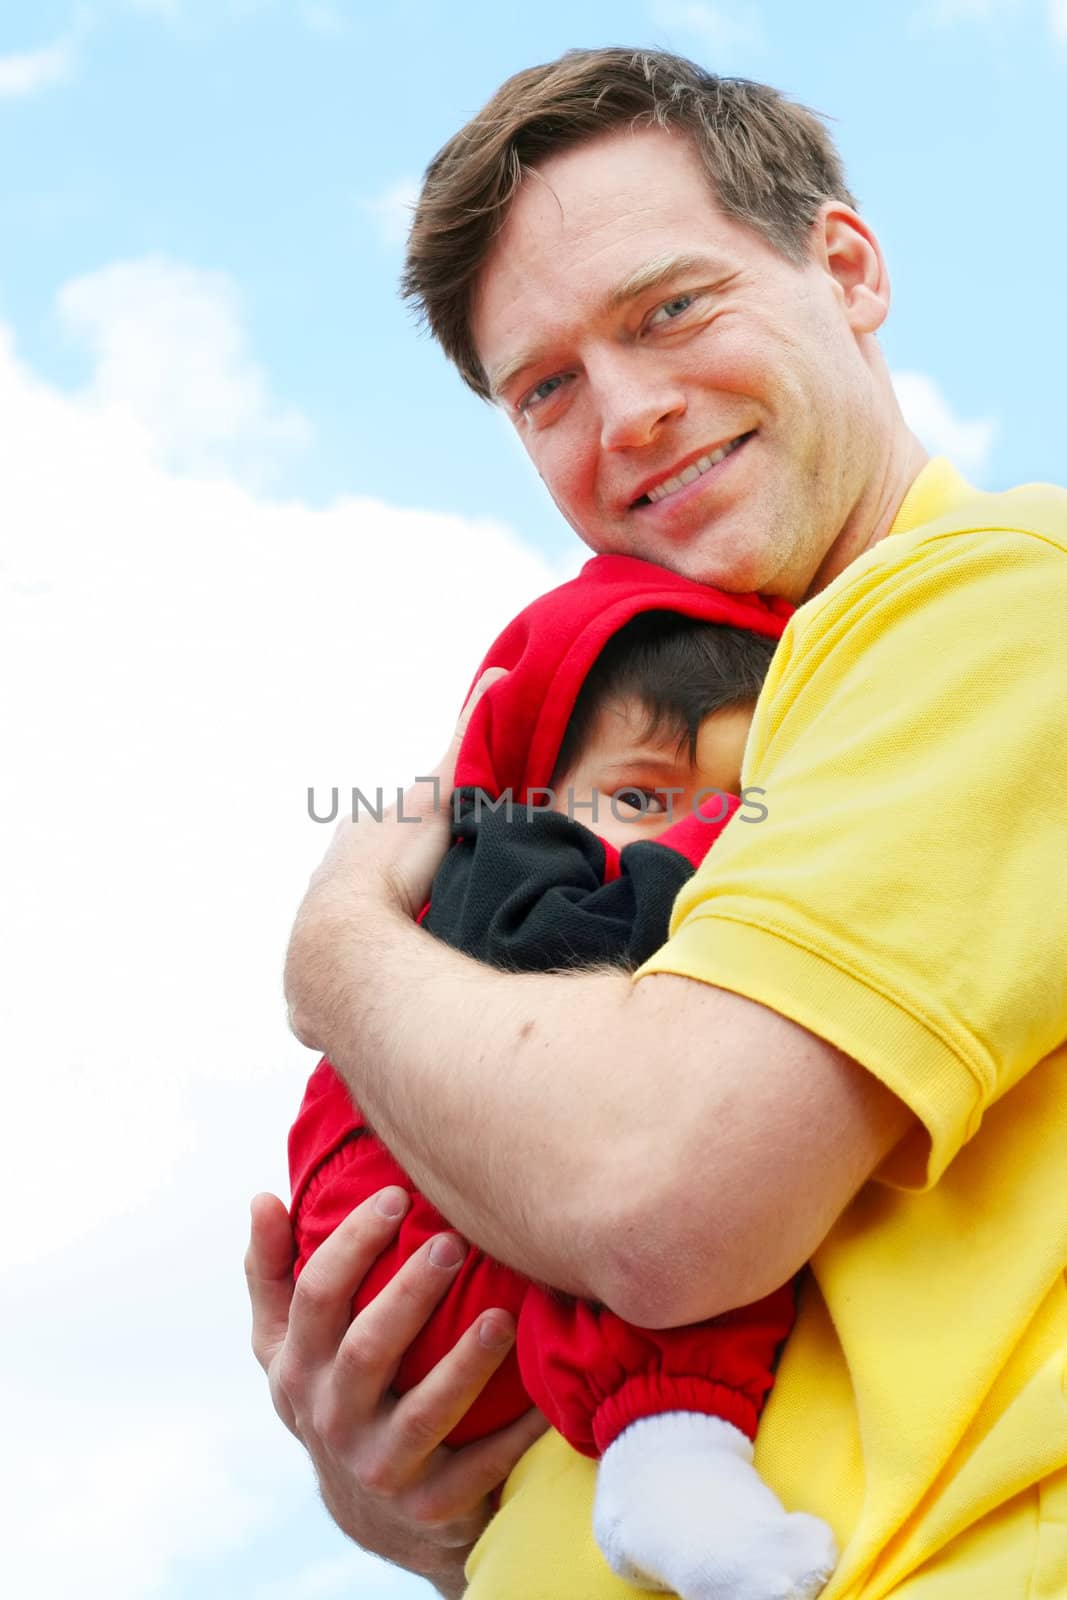 Baby cuddled safely in dad's arms by jarenwicklund